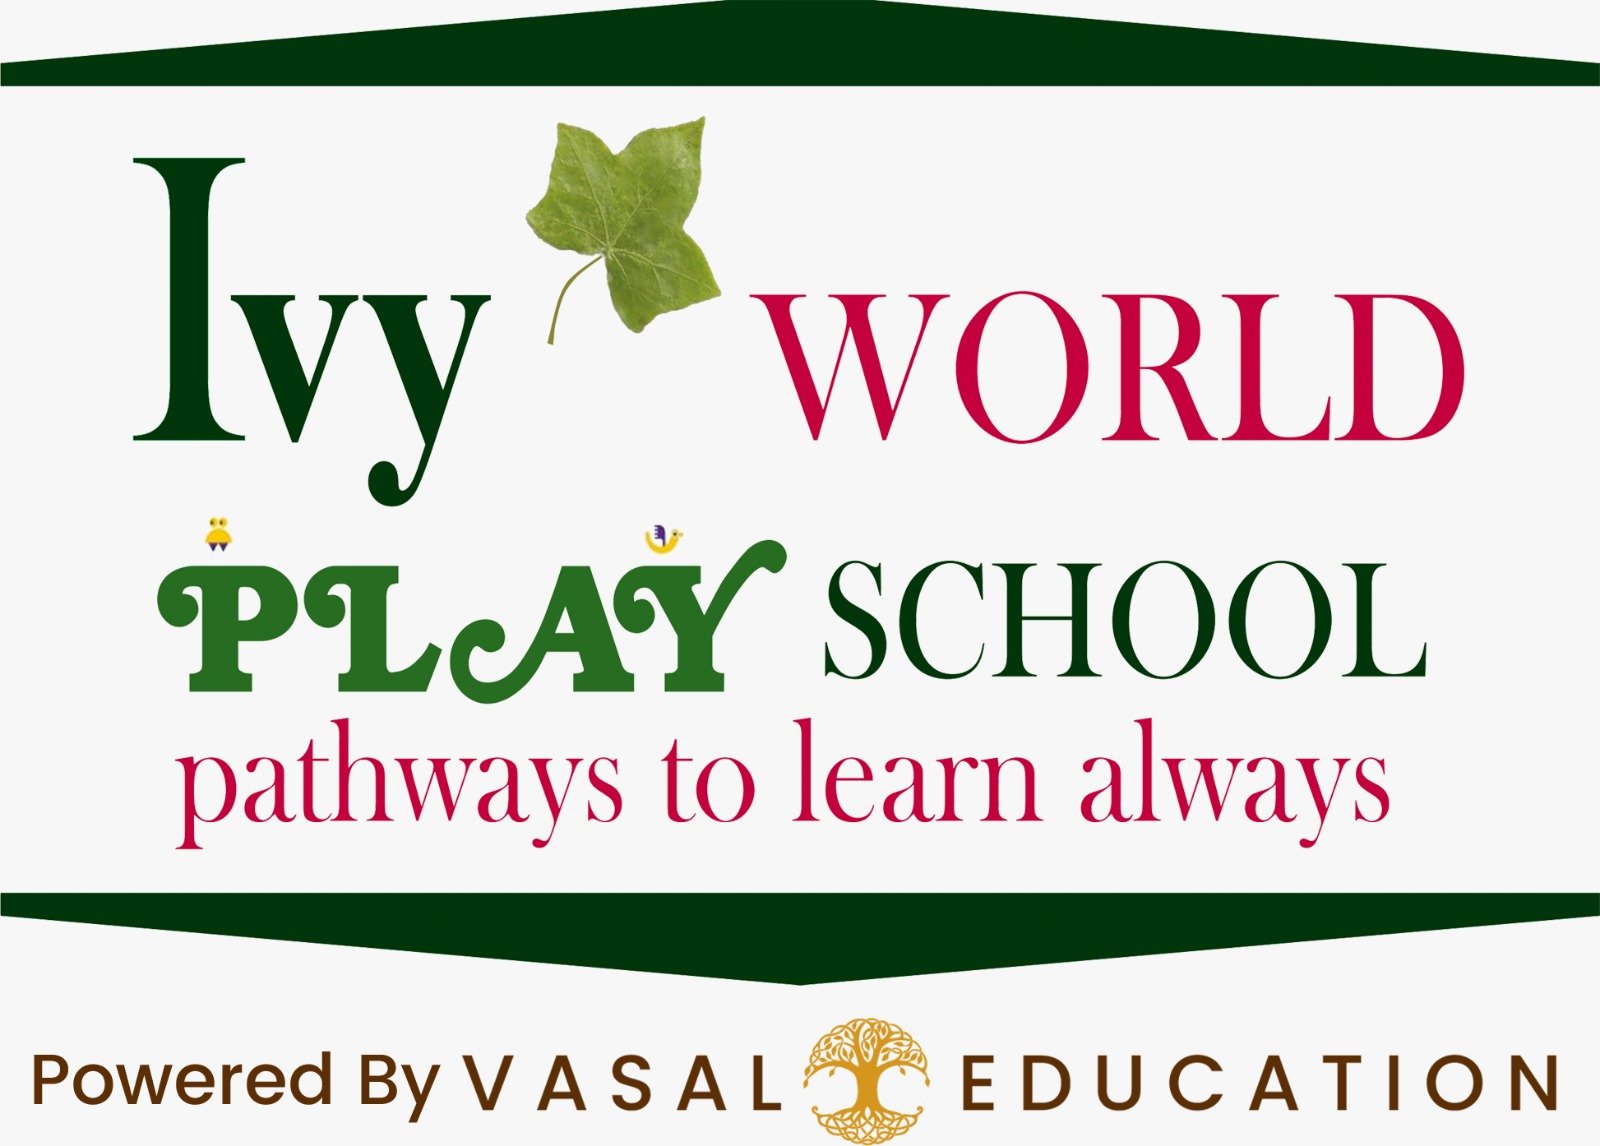  Ivy World Play School